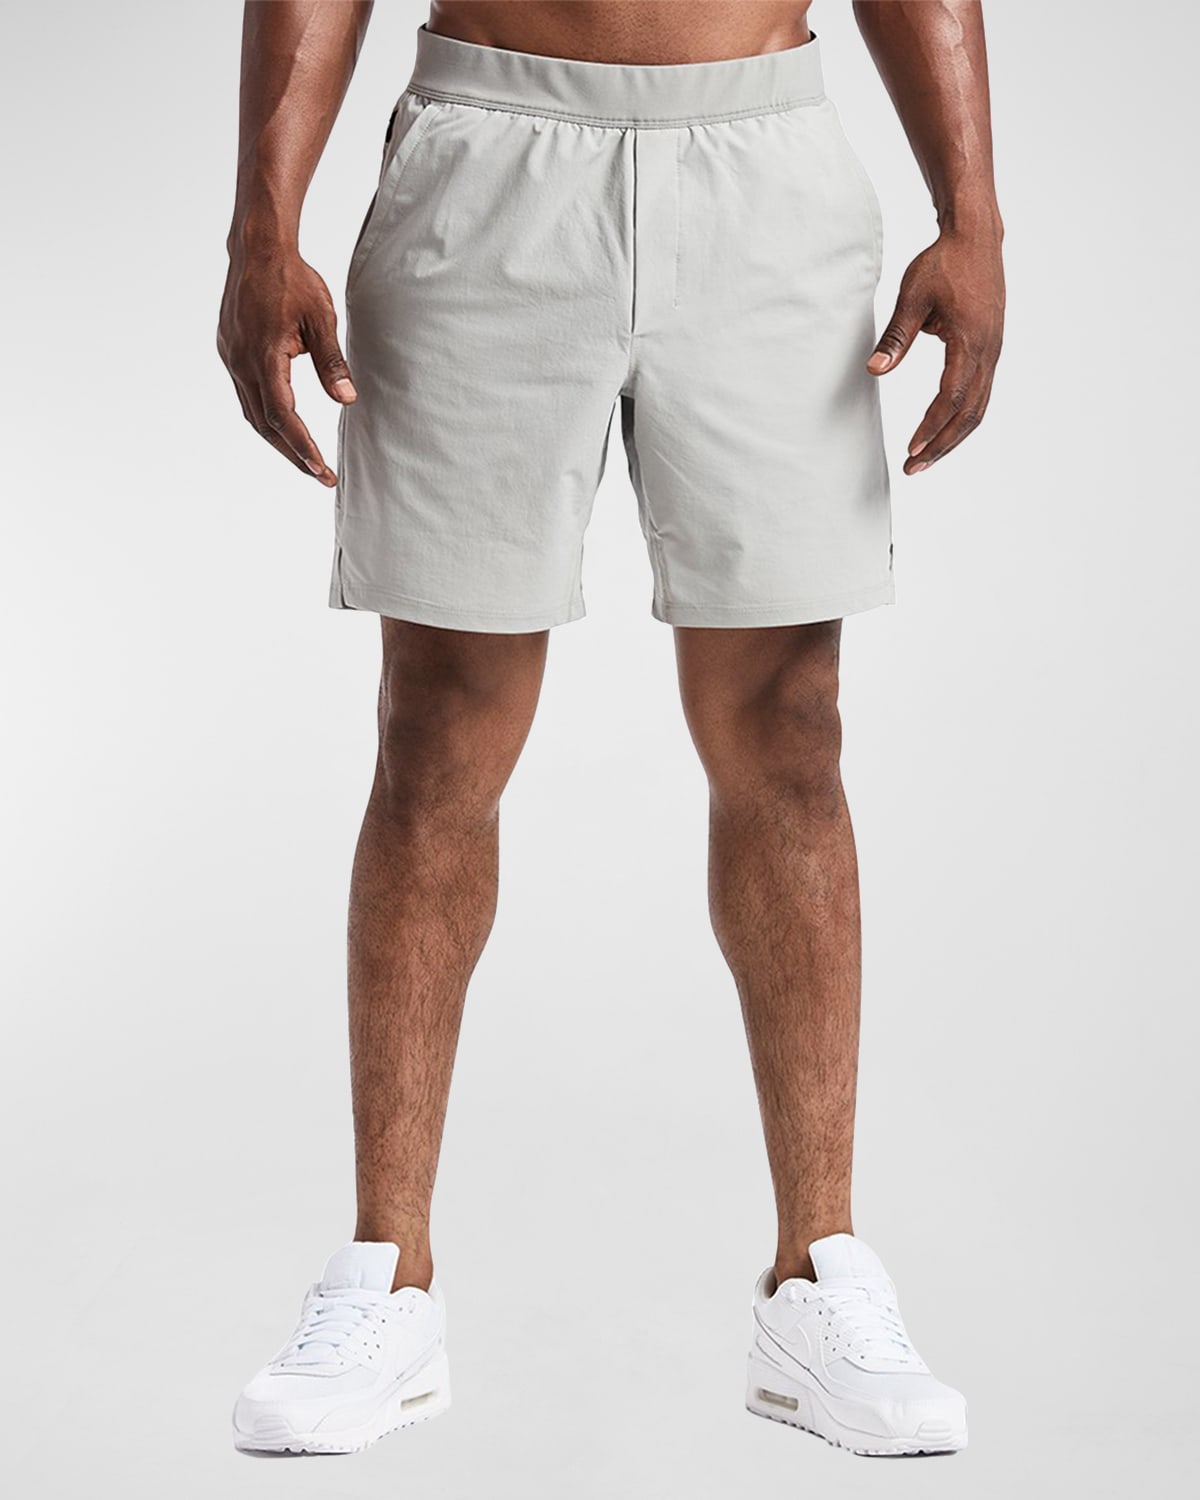 Men's Solid Flex Athletic Shorts